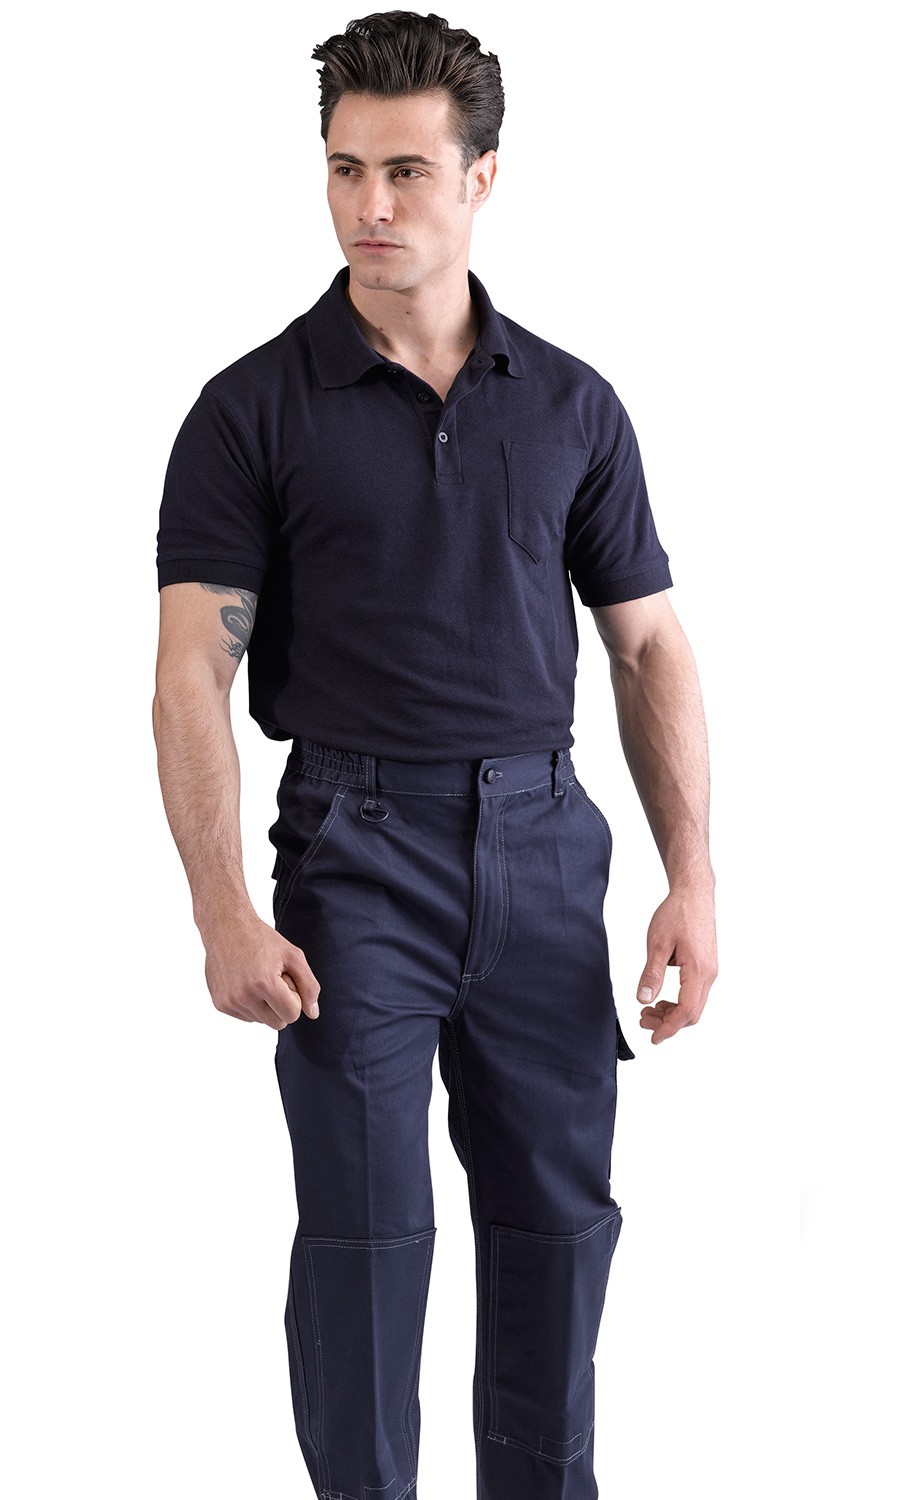 Pantalón Multibolsillos 100% algodón, 280 g/m2 - euroUniforms